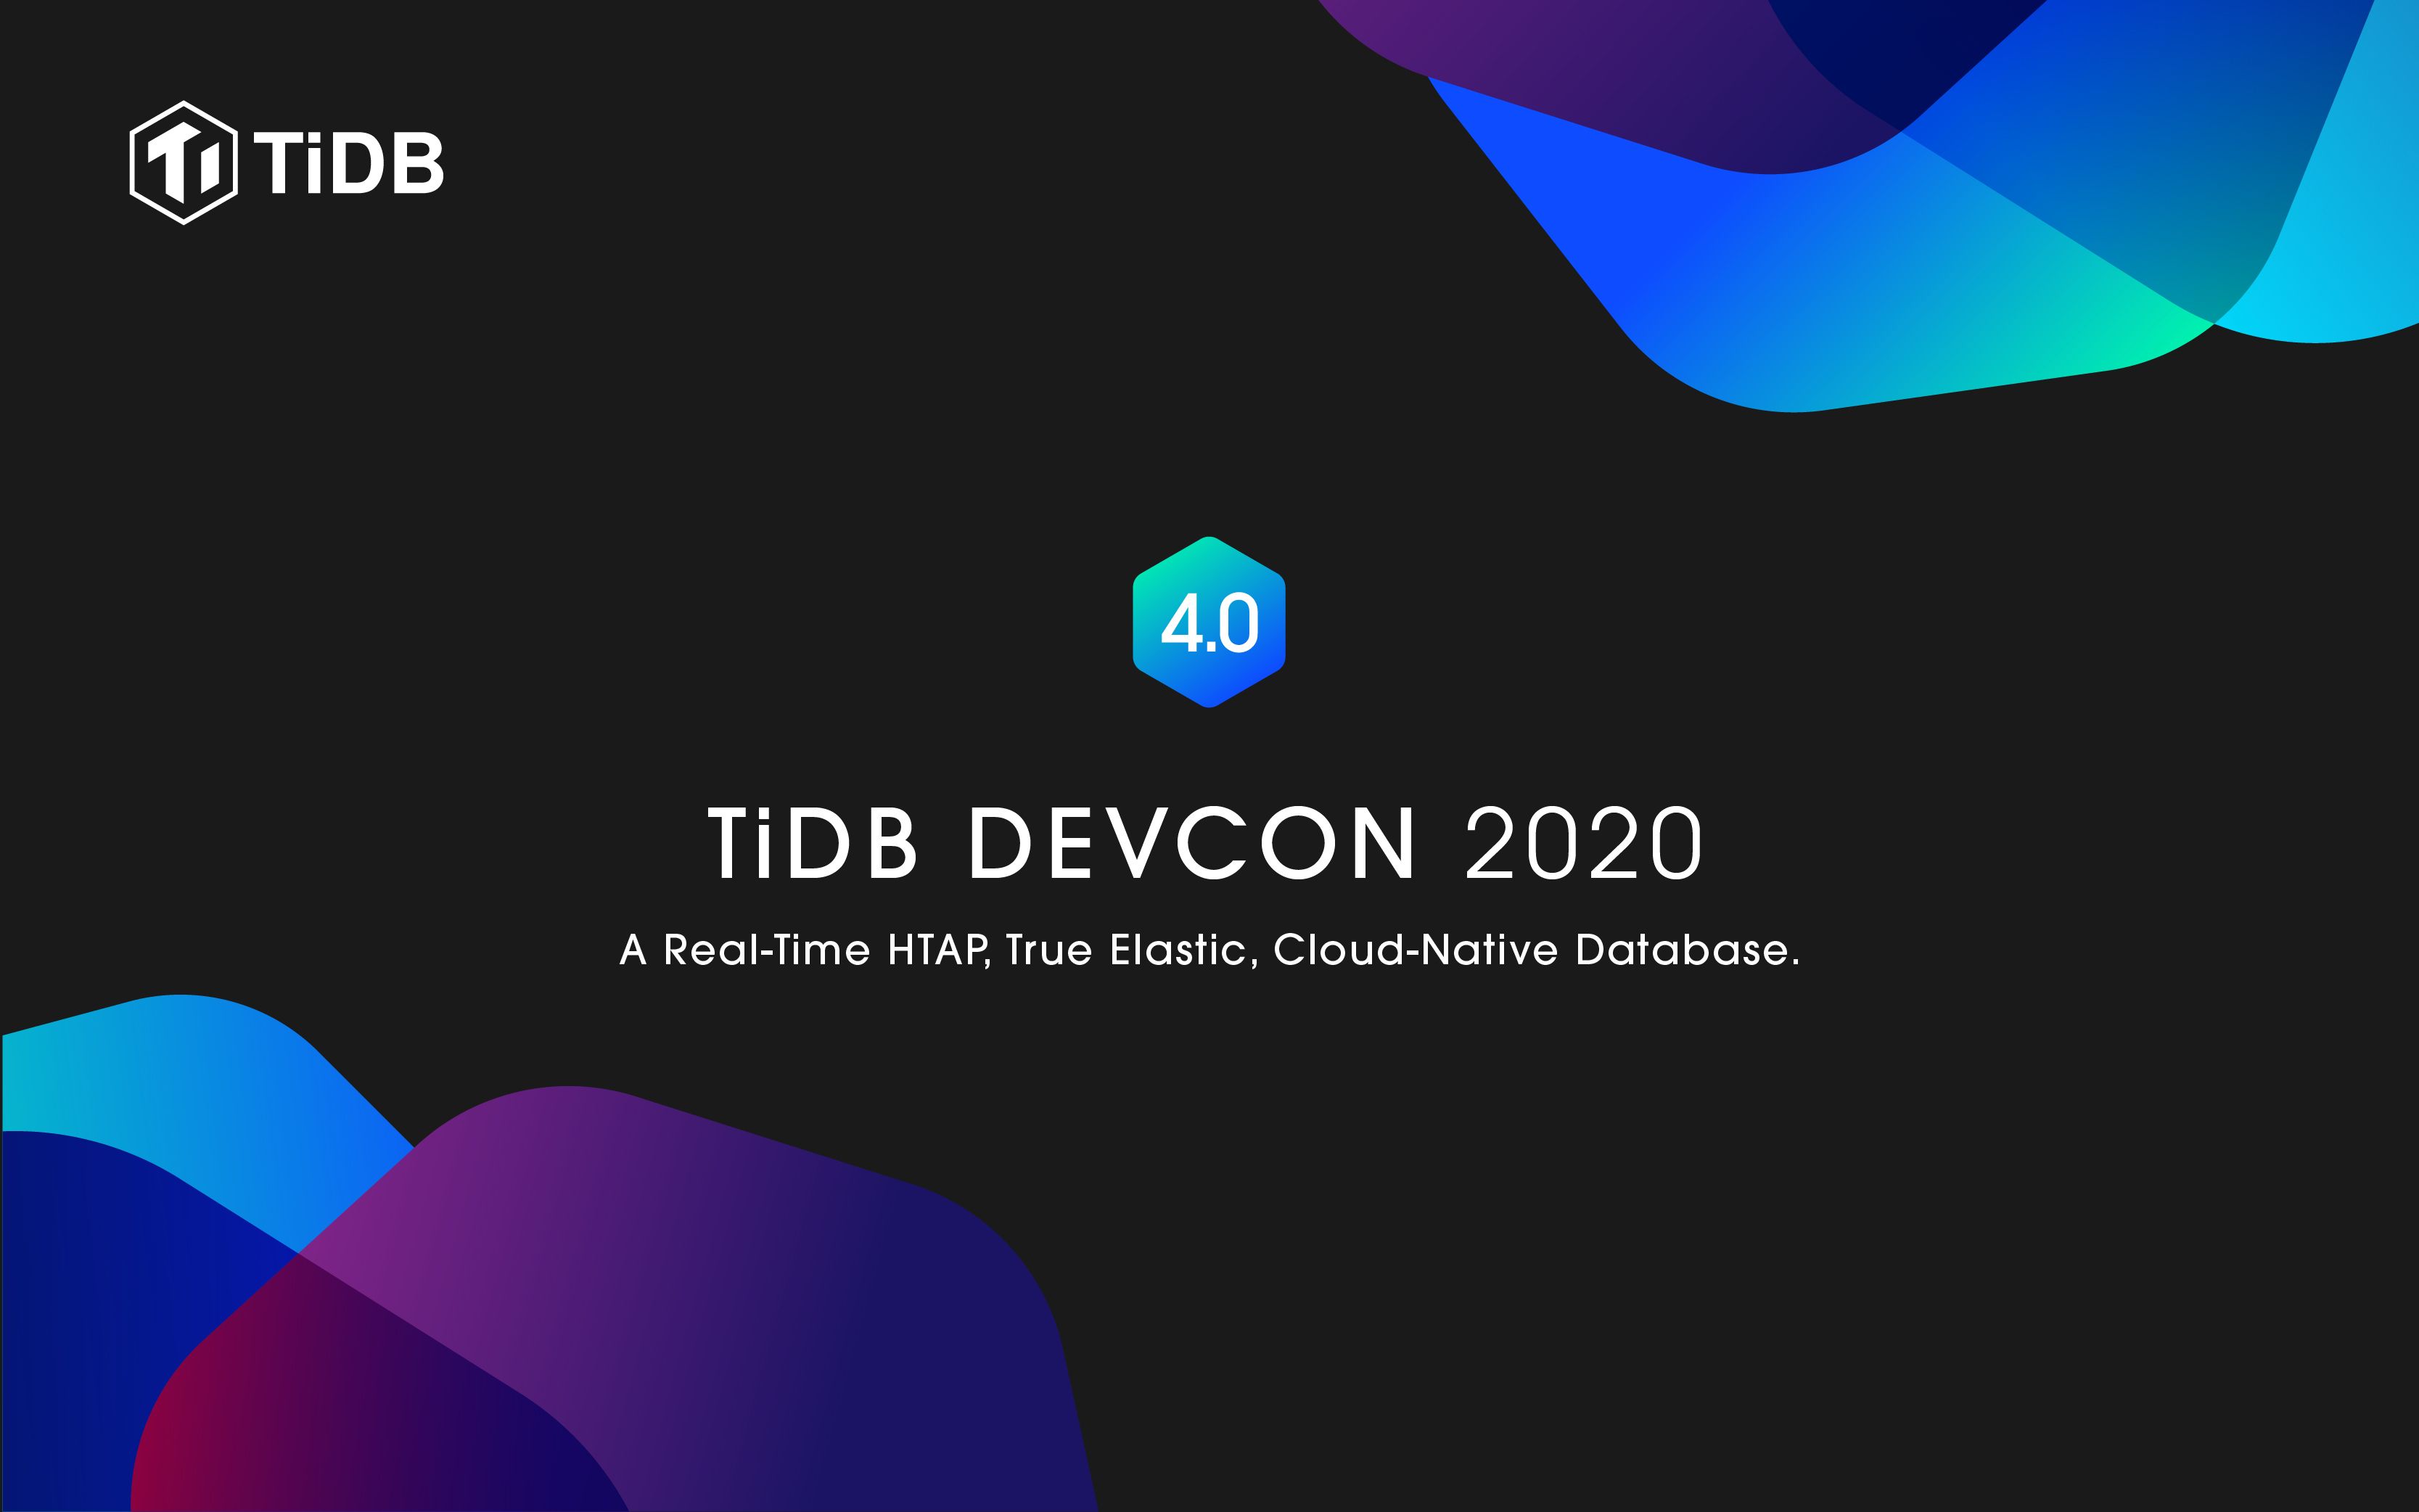 TiDB DevCon 2020